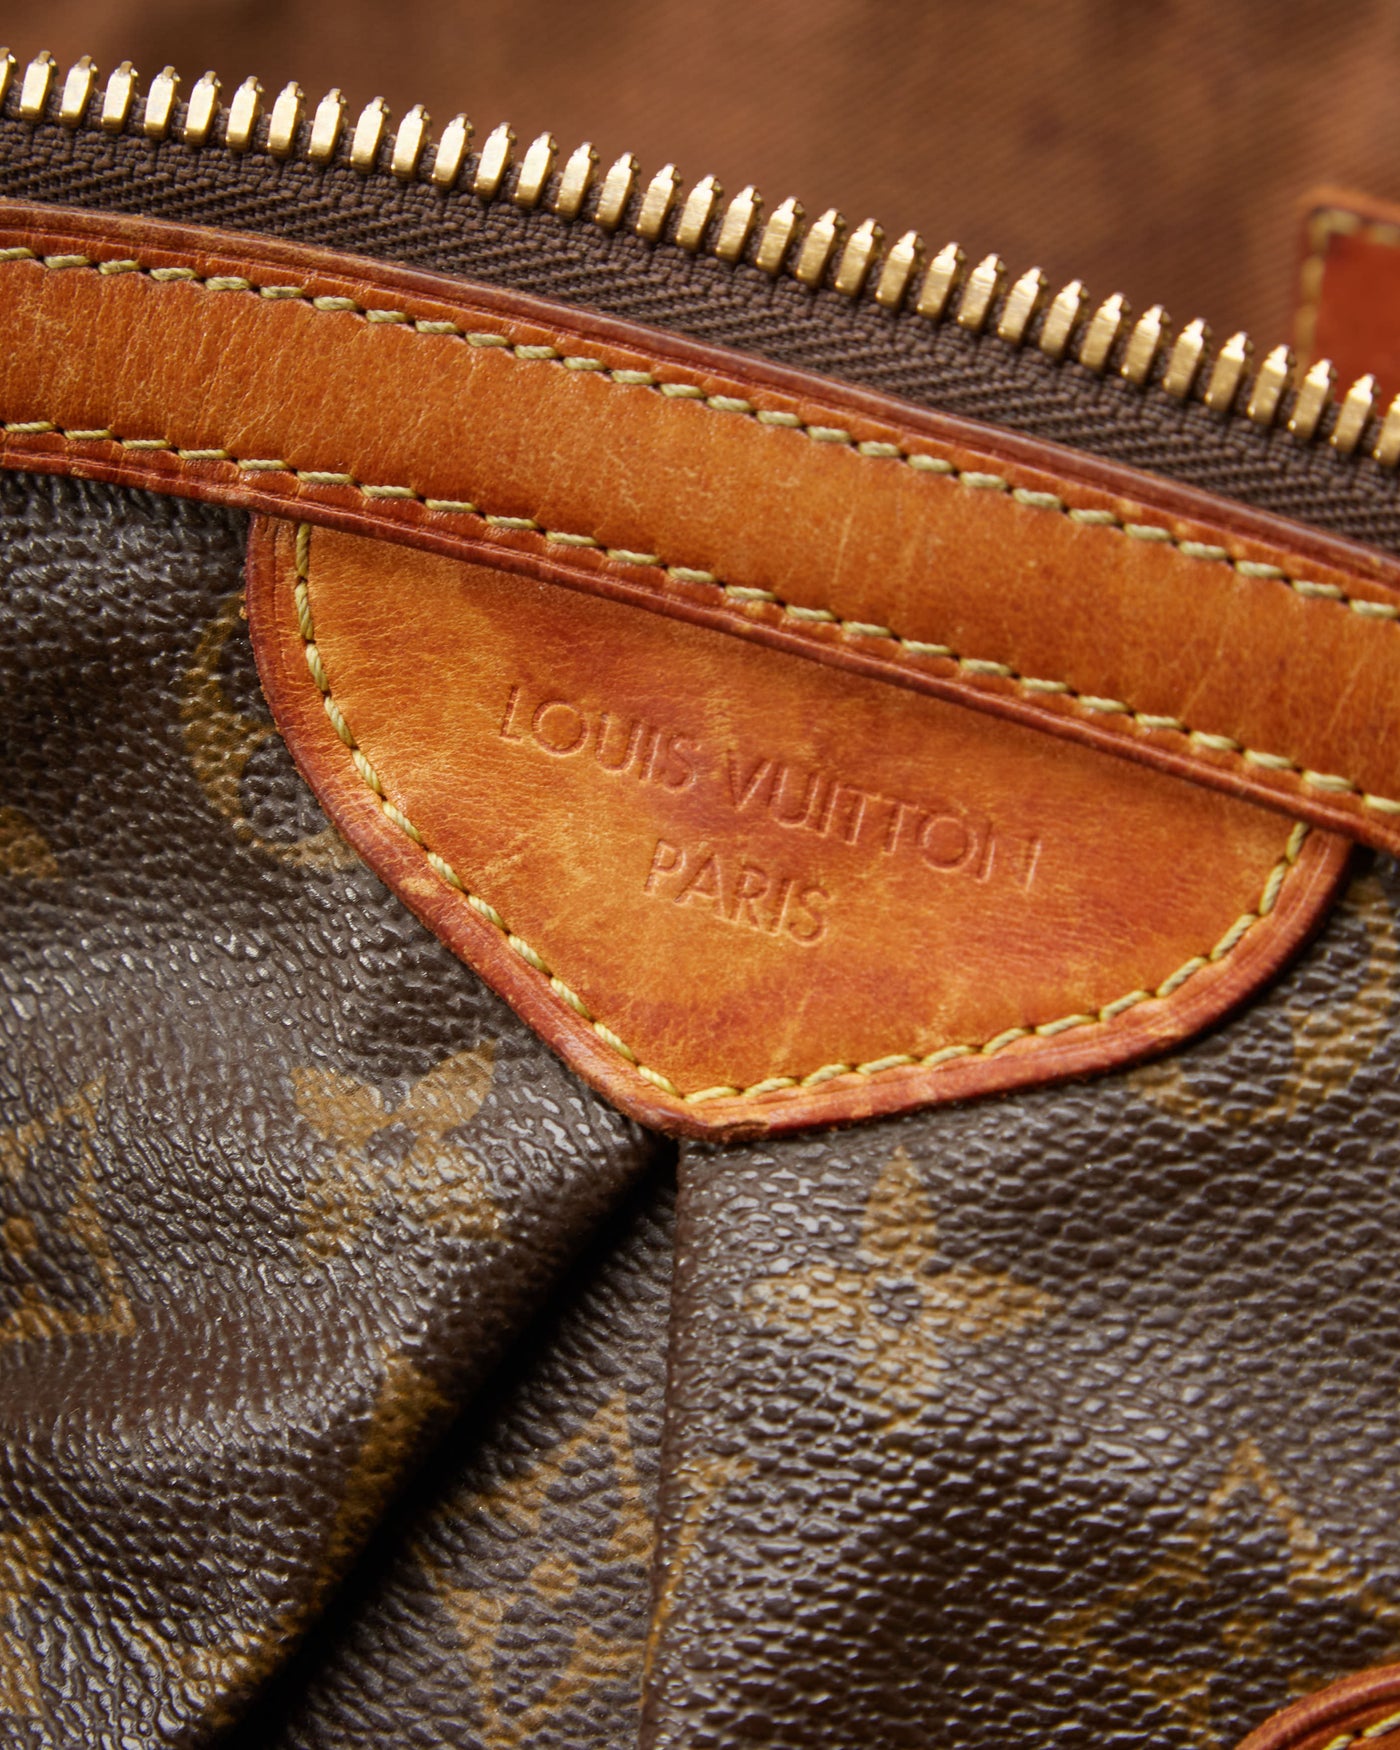 Louis Vuitton Brown Logo Leather Handbag - One Size